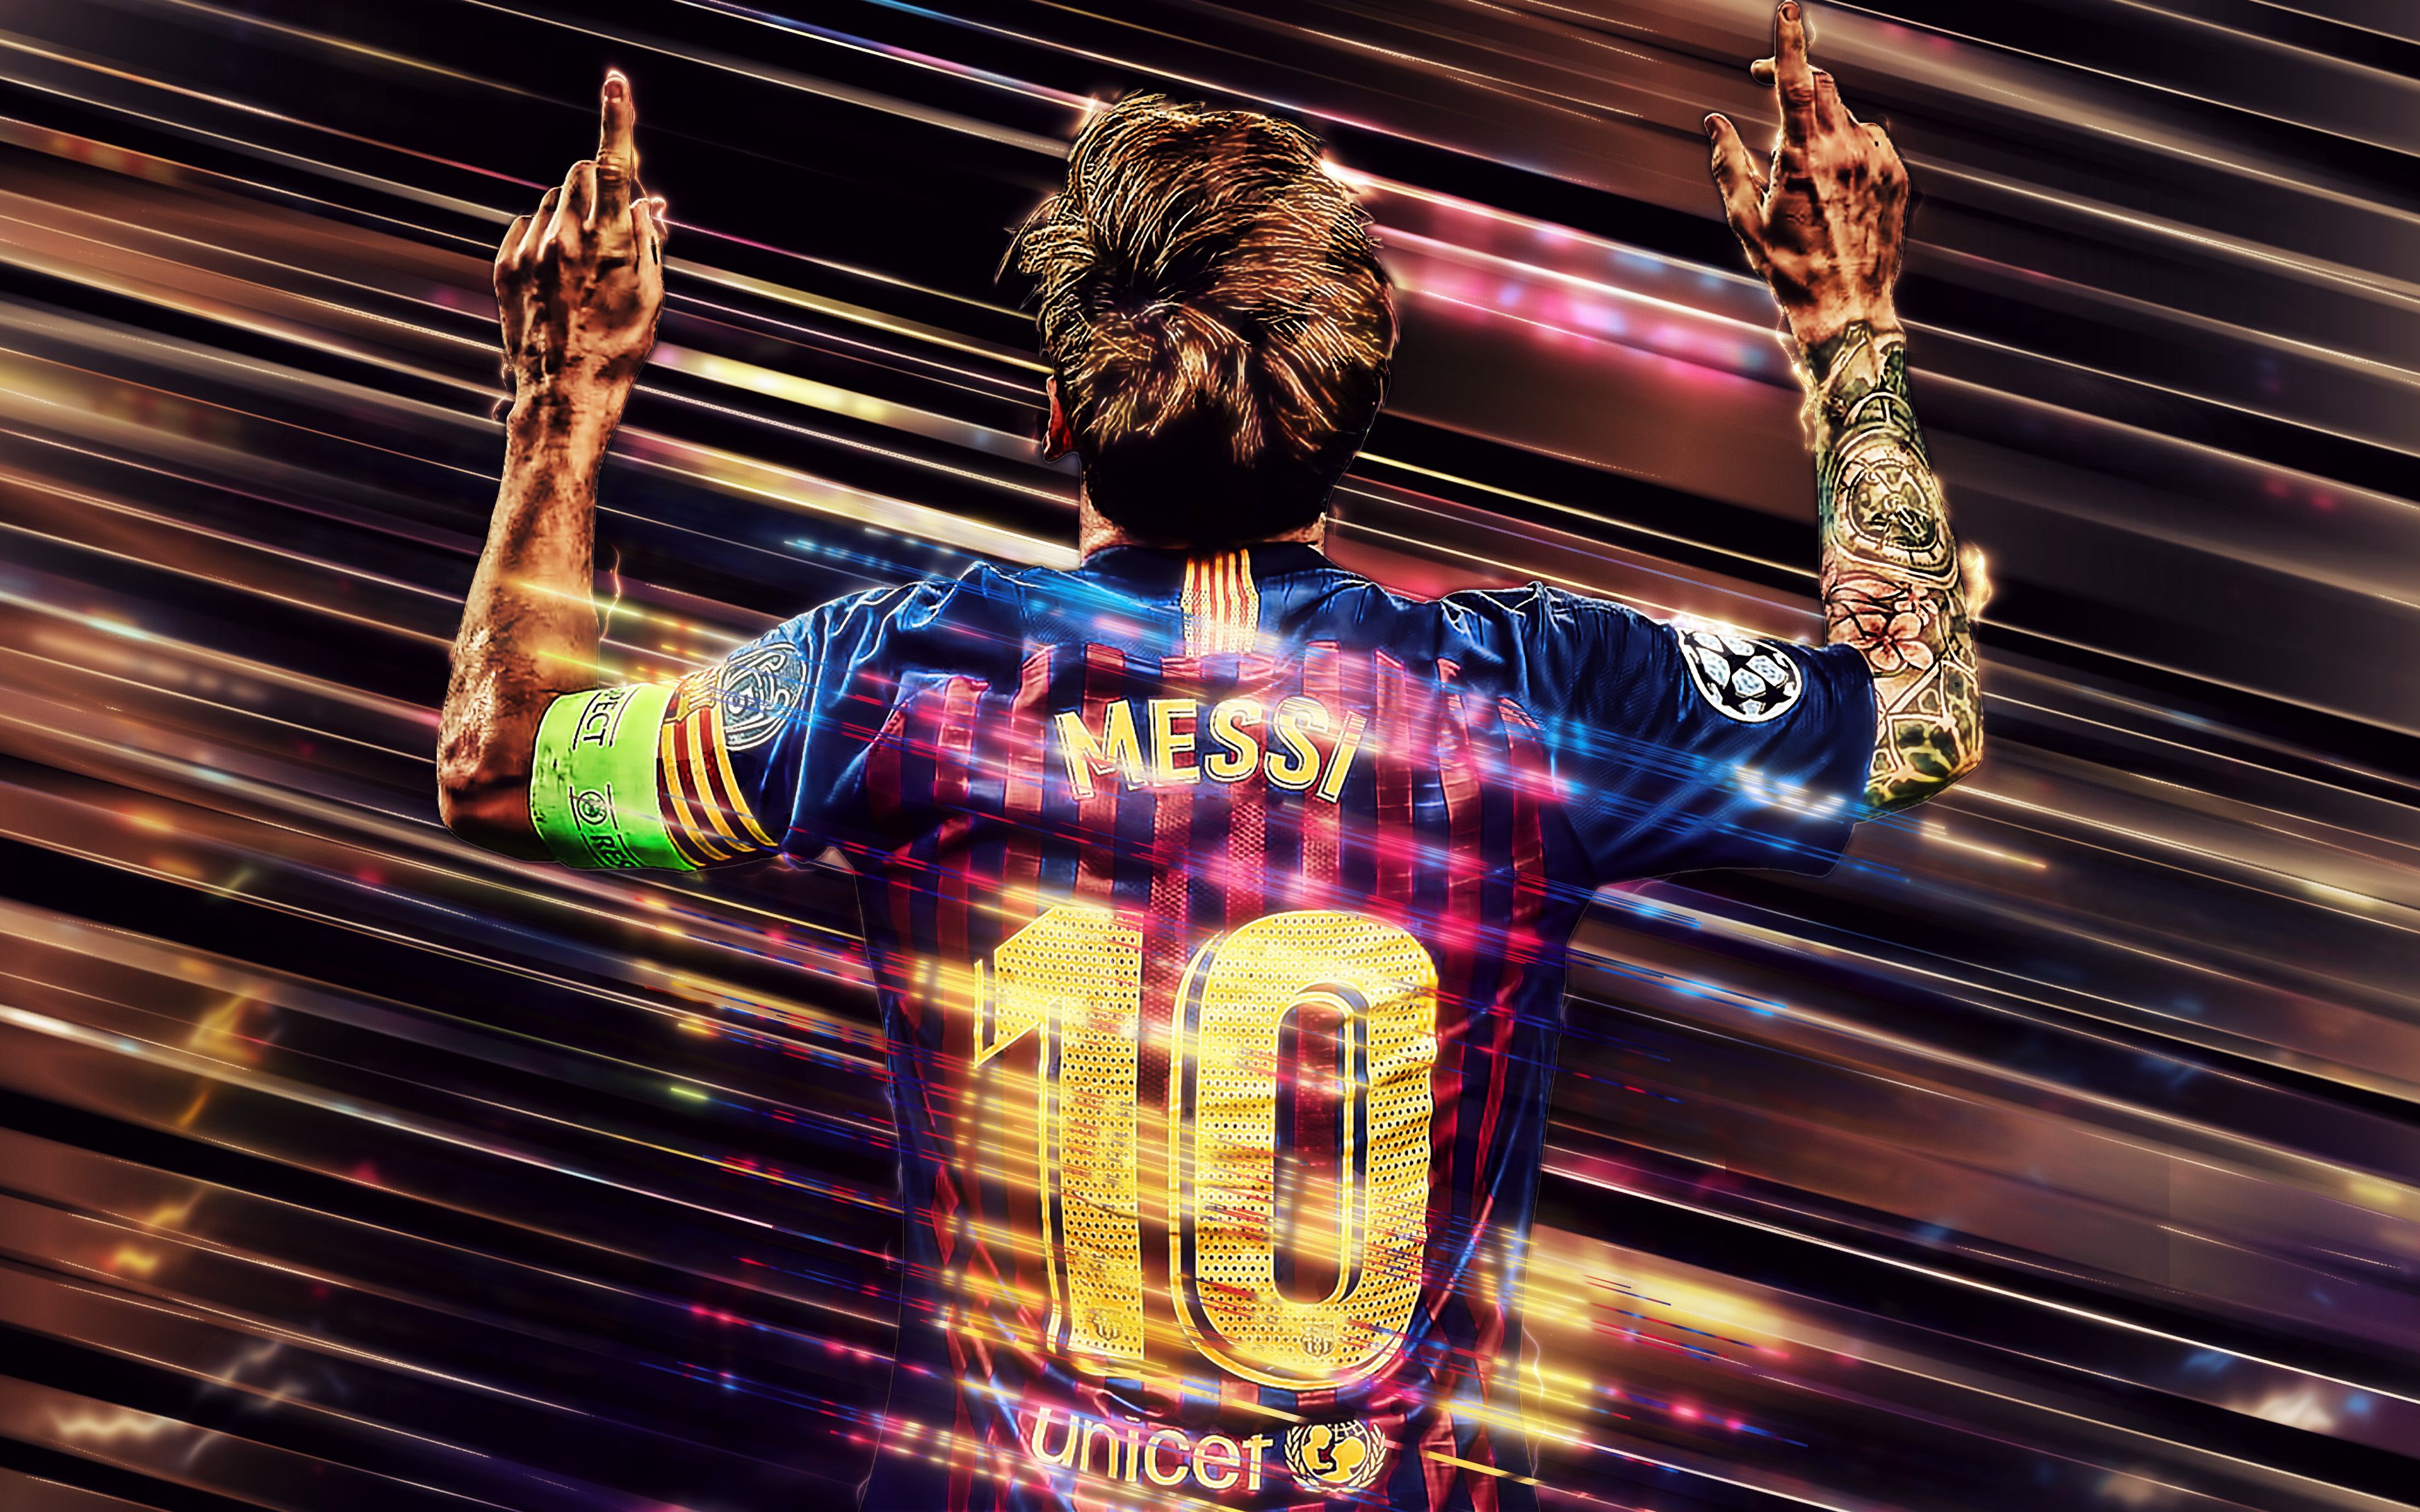 Messi Wallpaper 4K